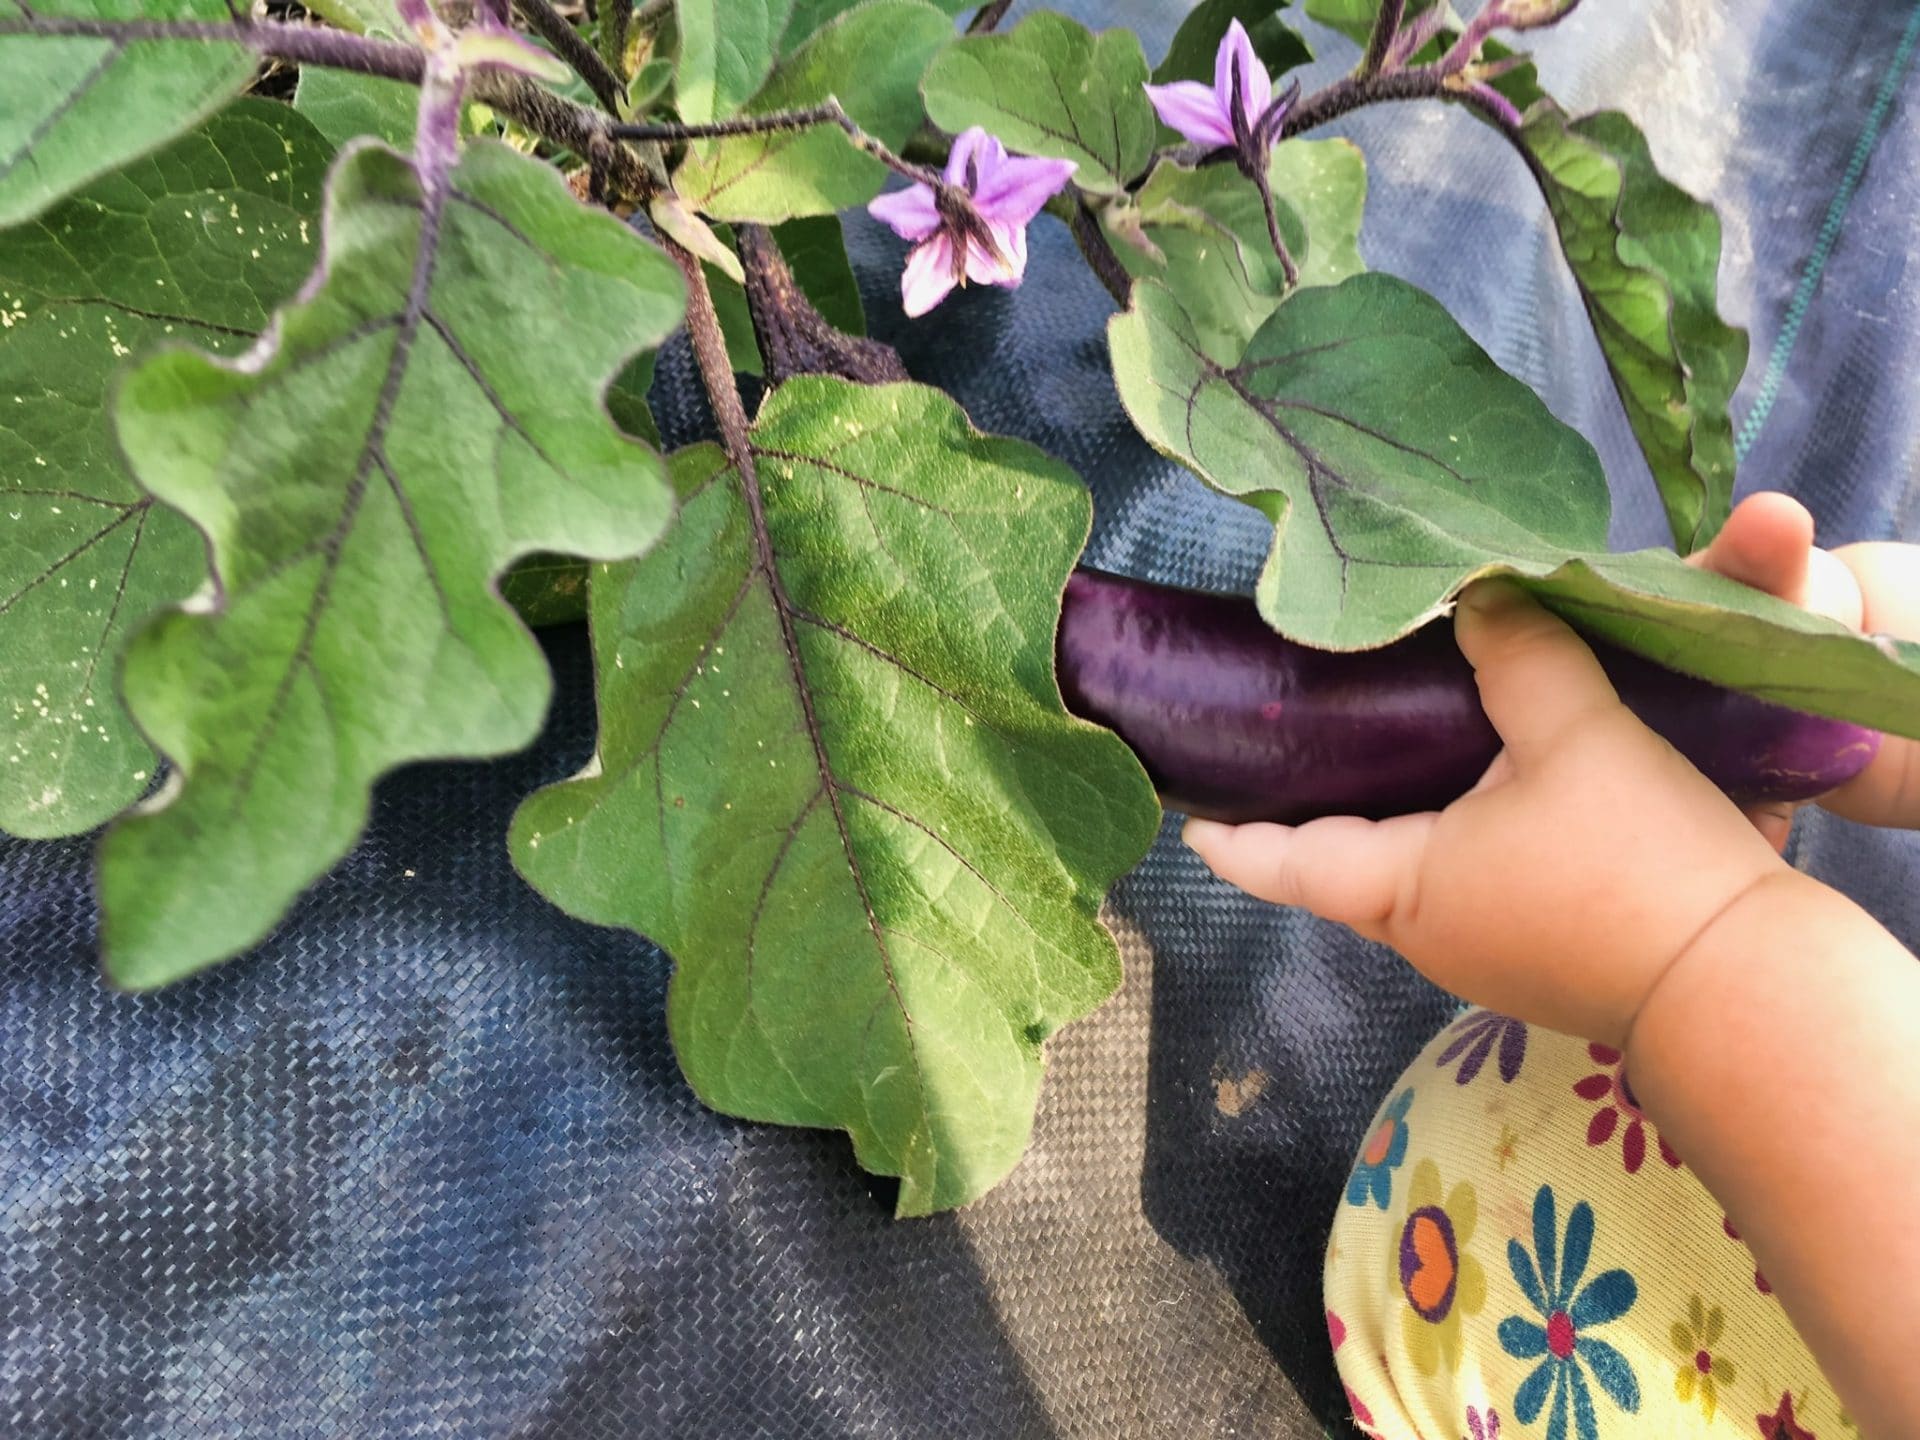 Max handles and eggplant